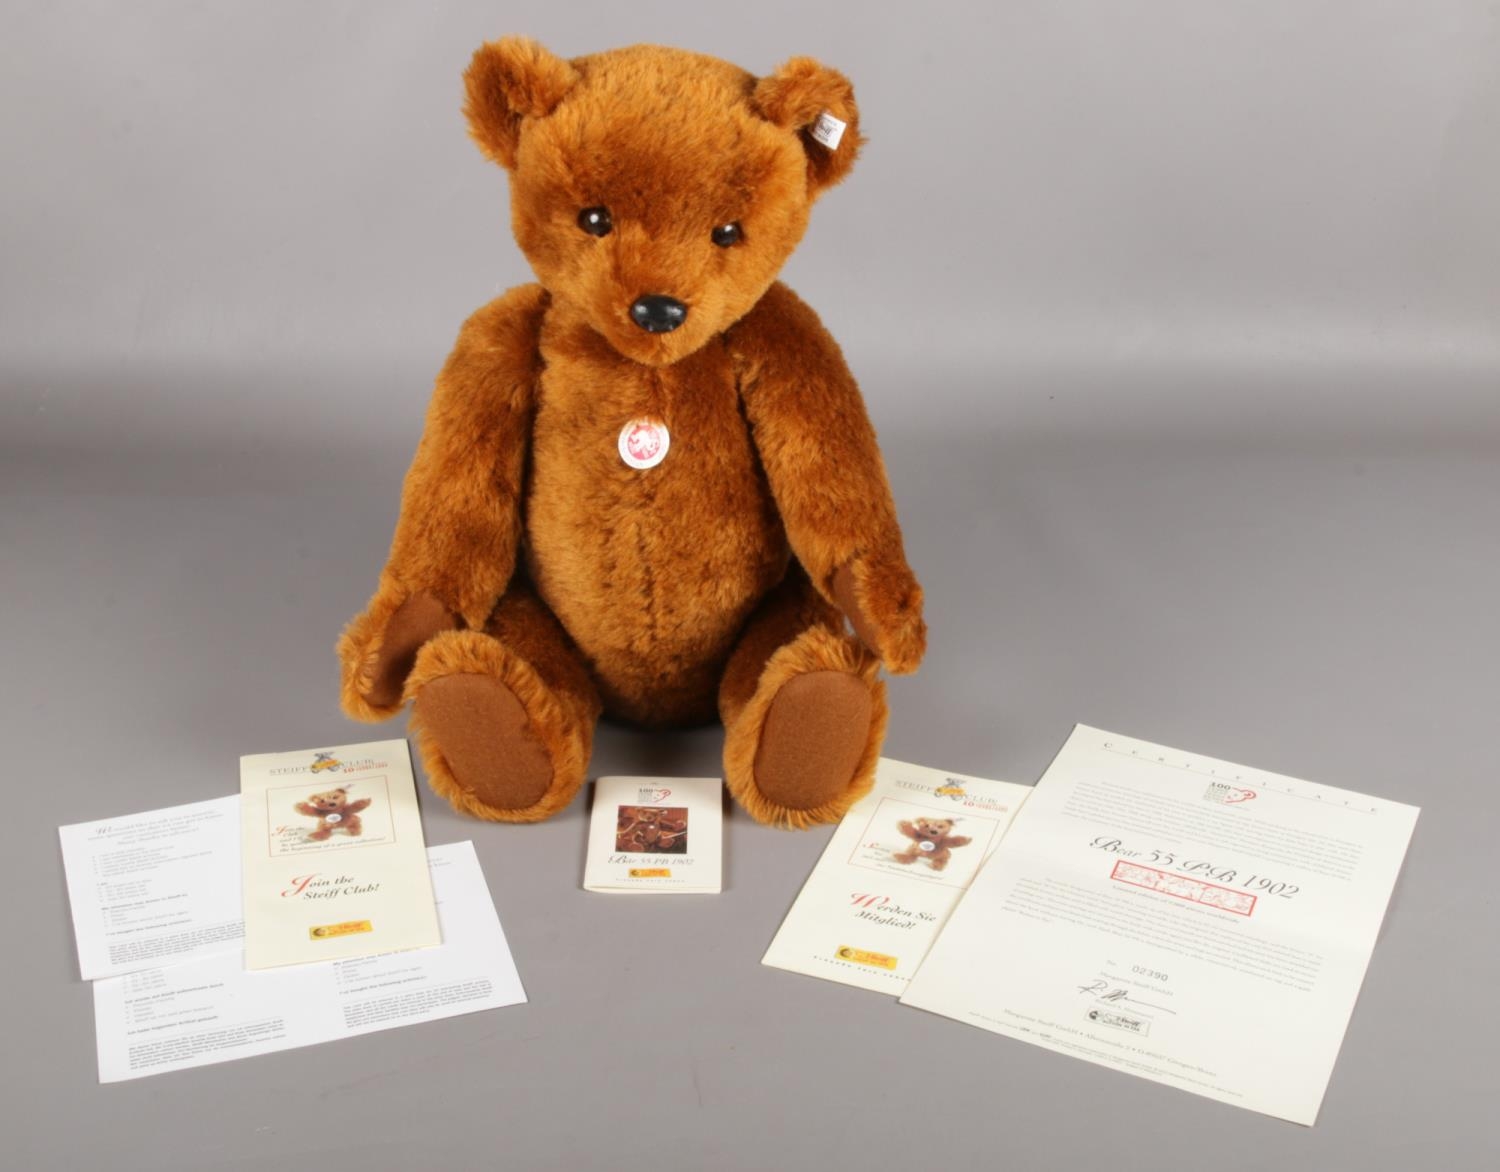 A boxed Steiff 55PB Limited Edition teddy bear, 1902 Replica, 55cm, Number 02390/7000 worldwide.